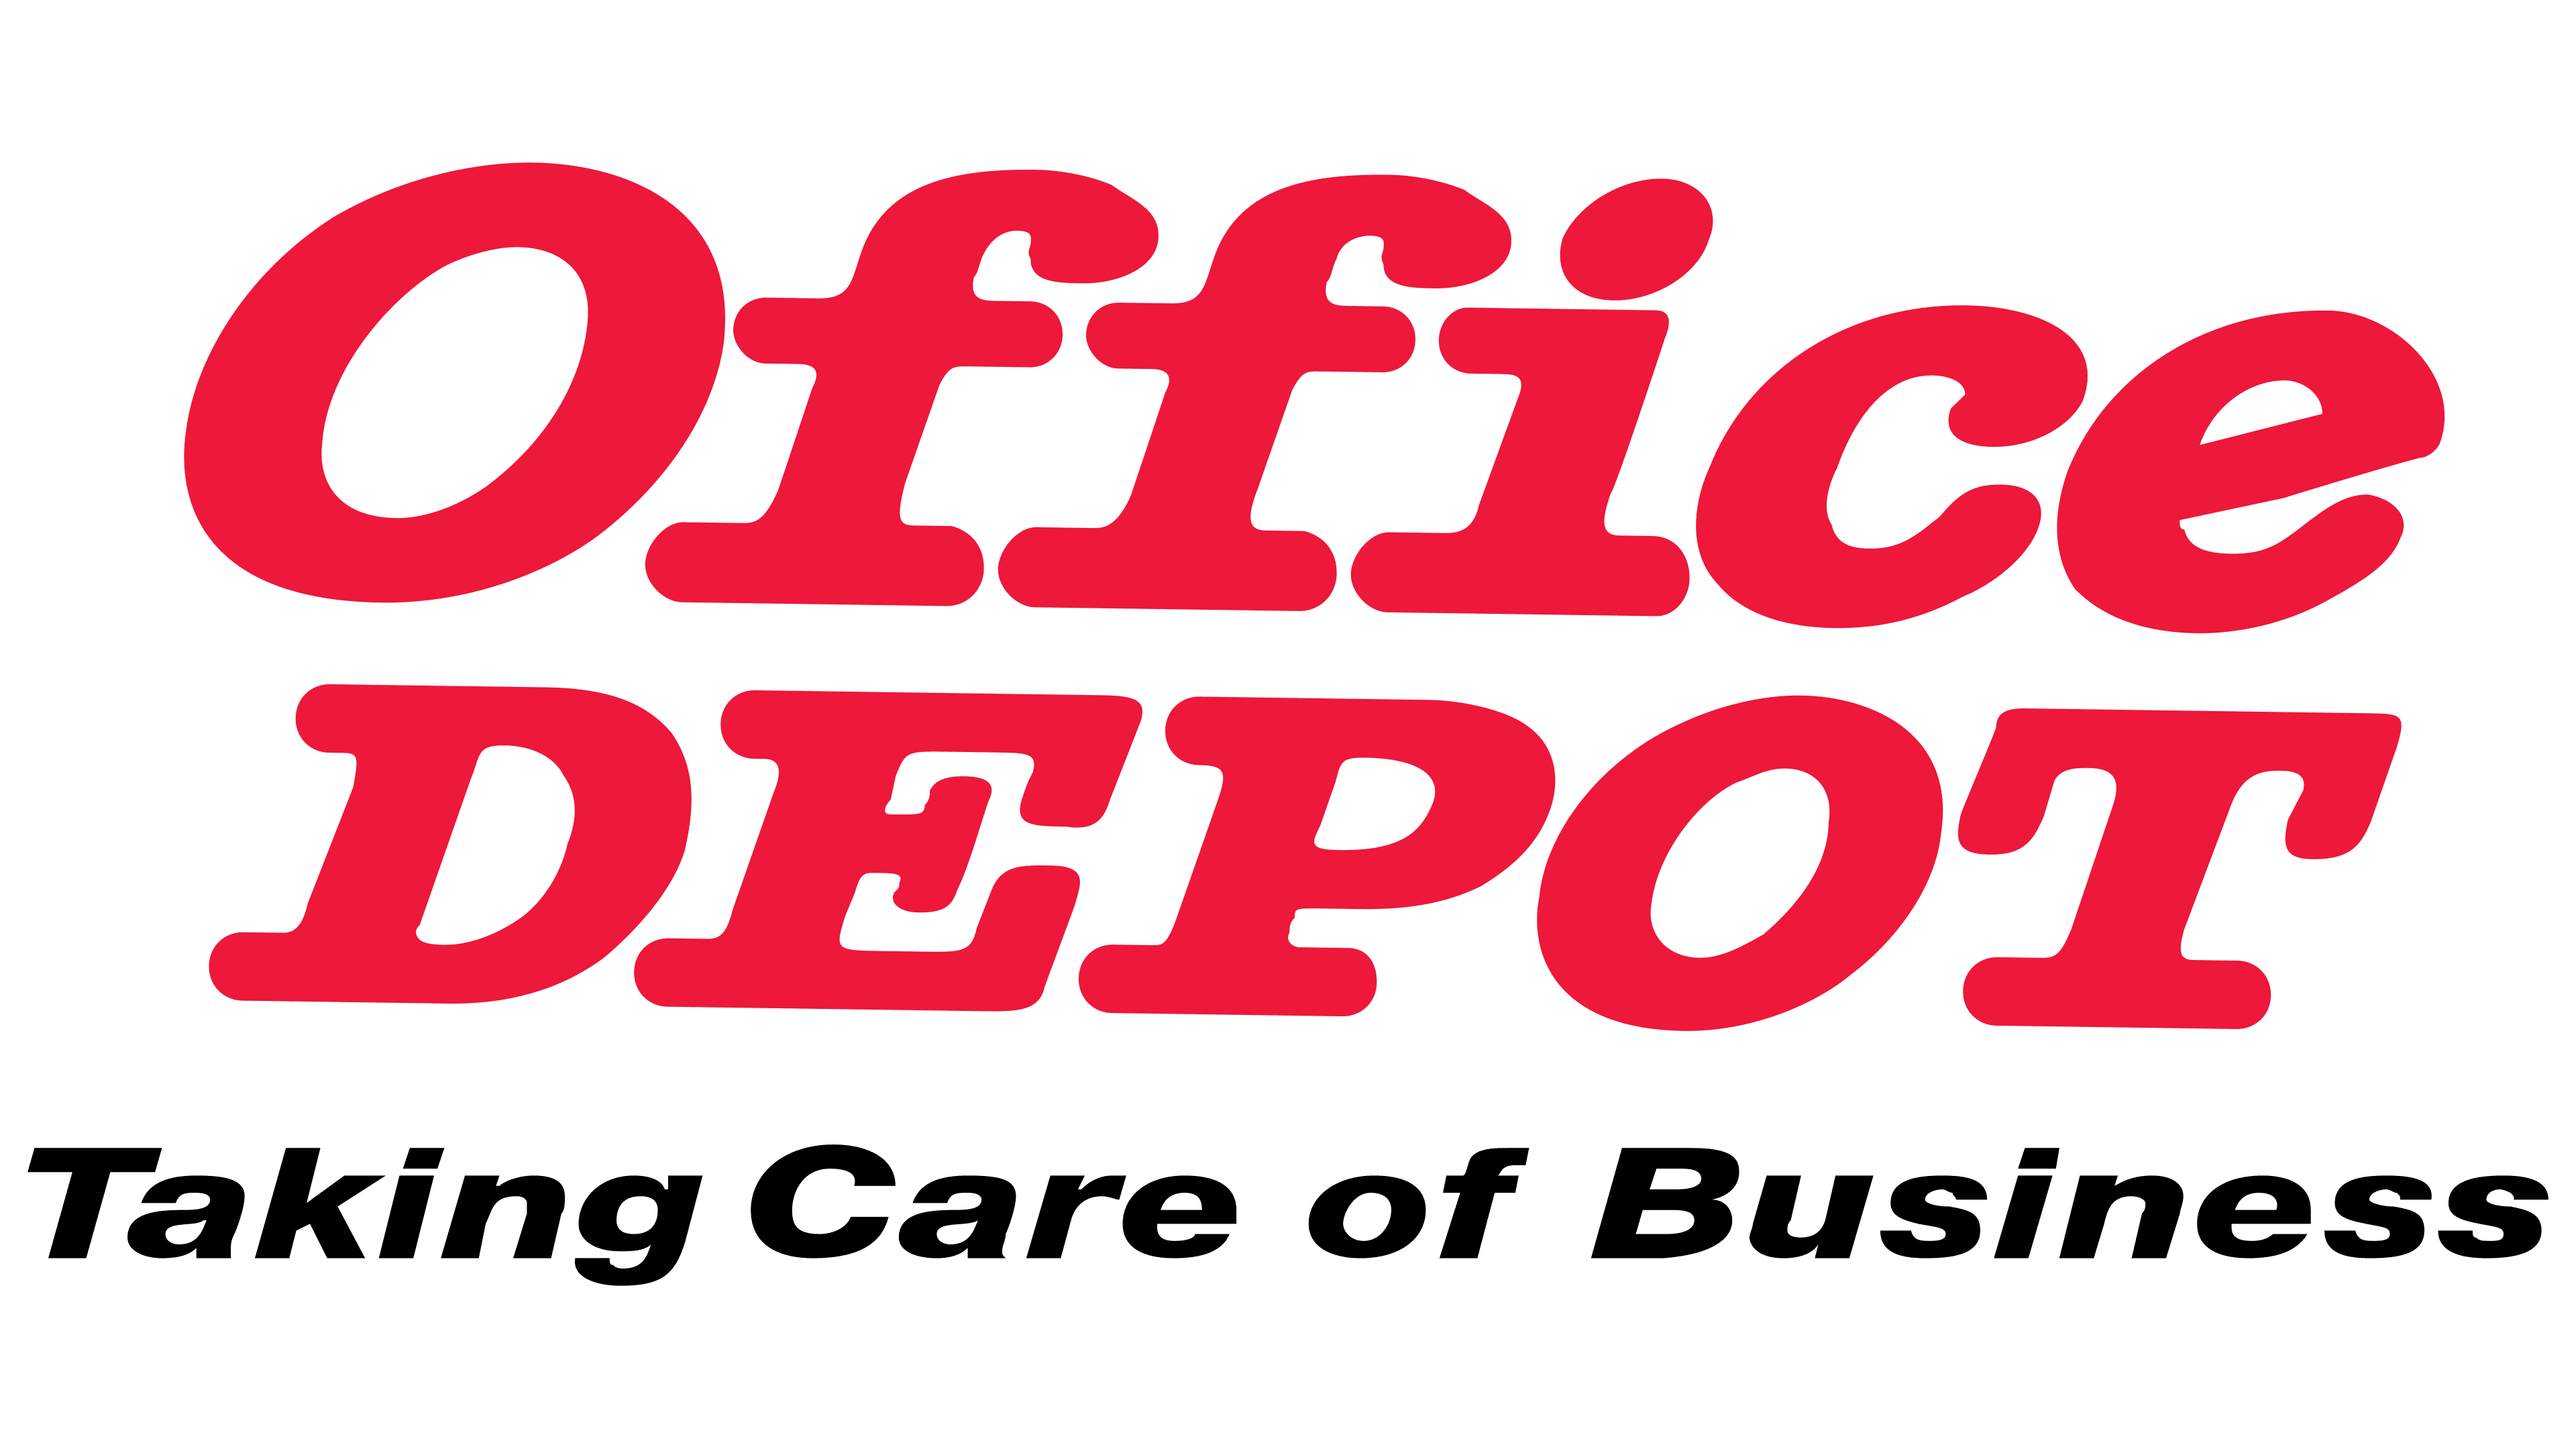 office depot logo transparent